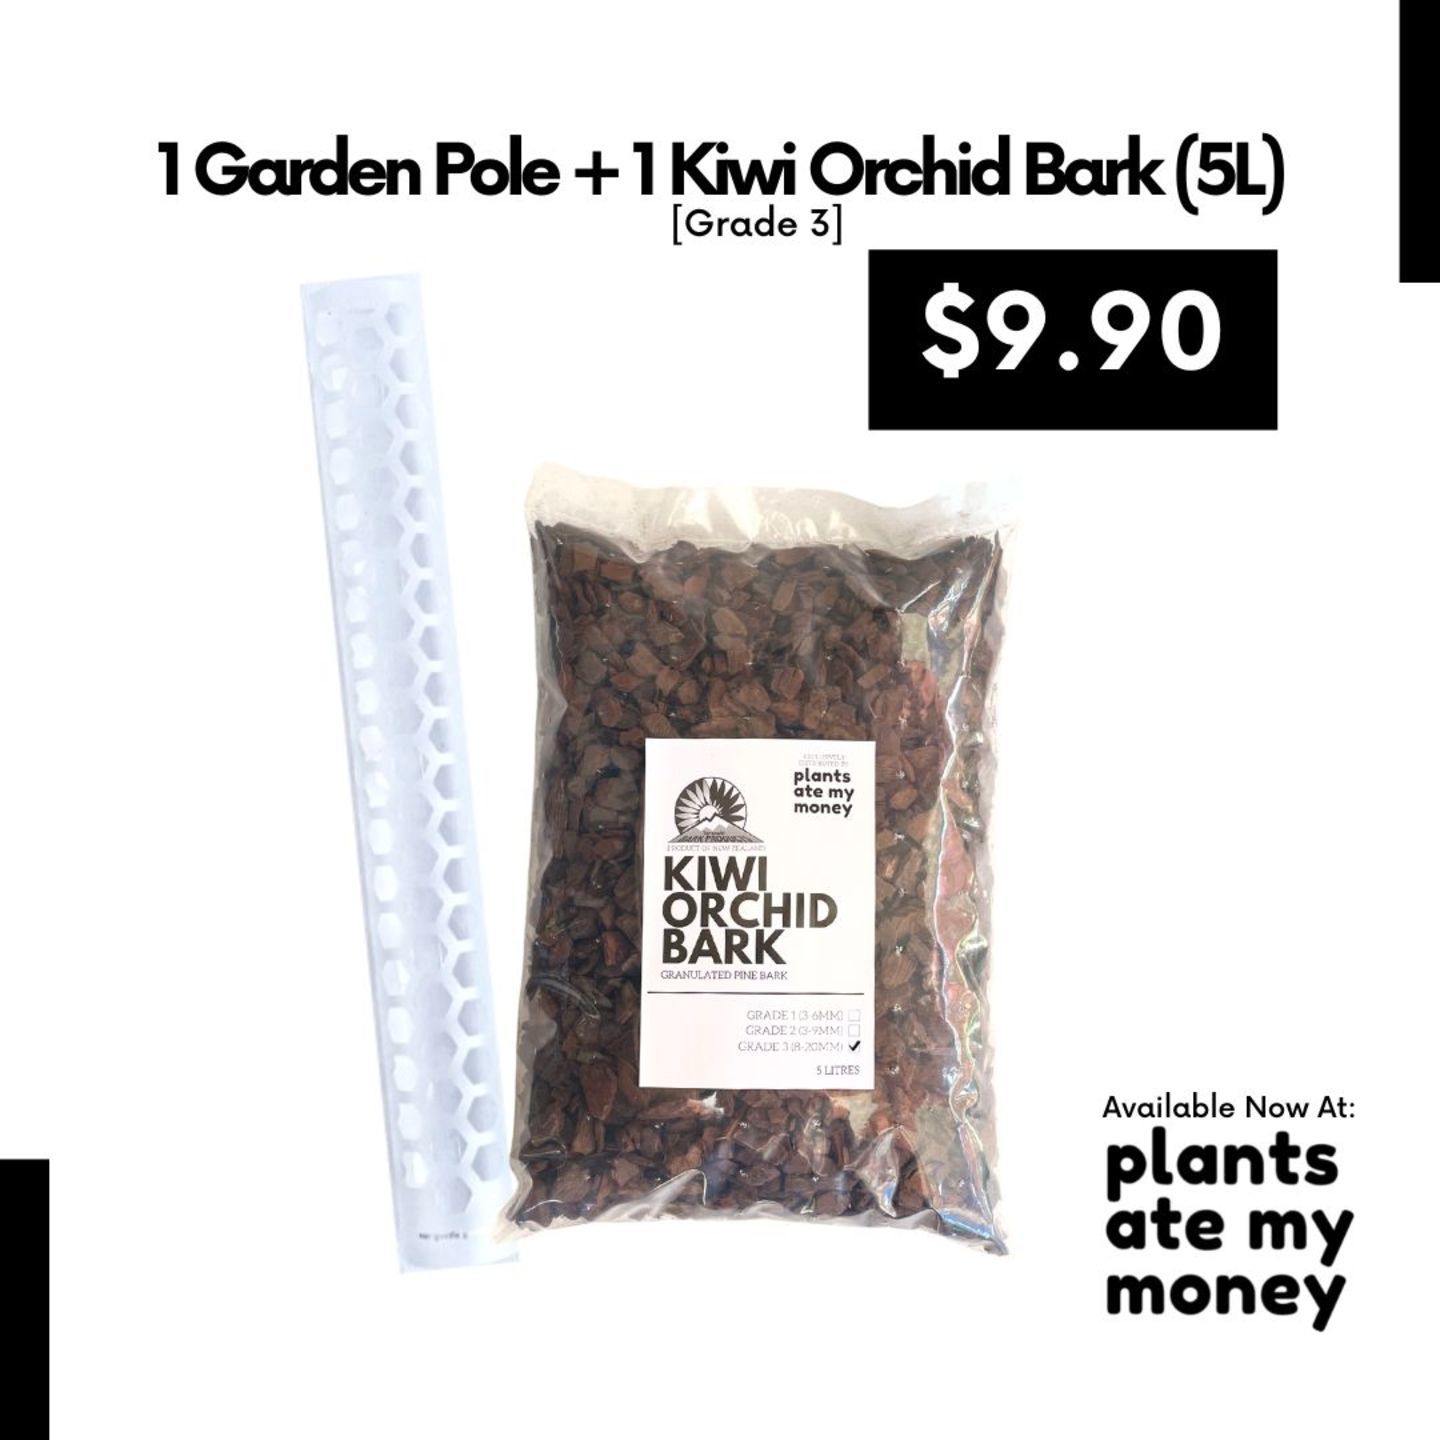 1 Garden Pole + 1 Kiwi Orchid Bark 5L